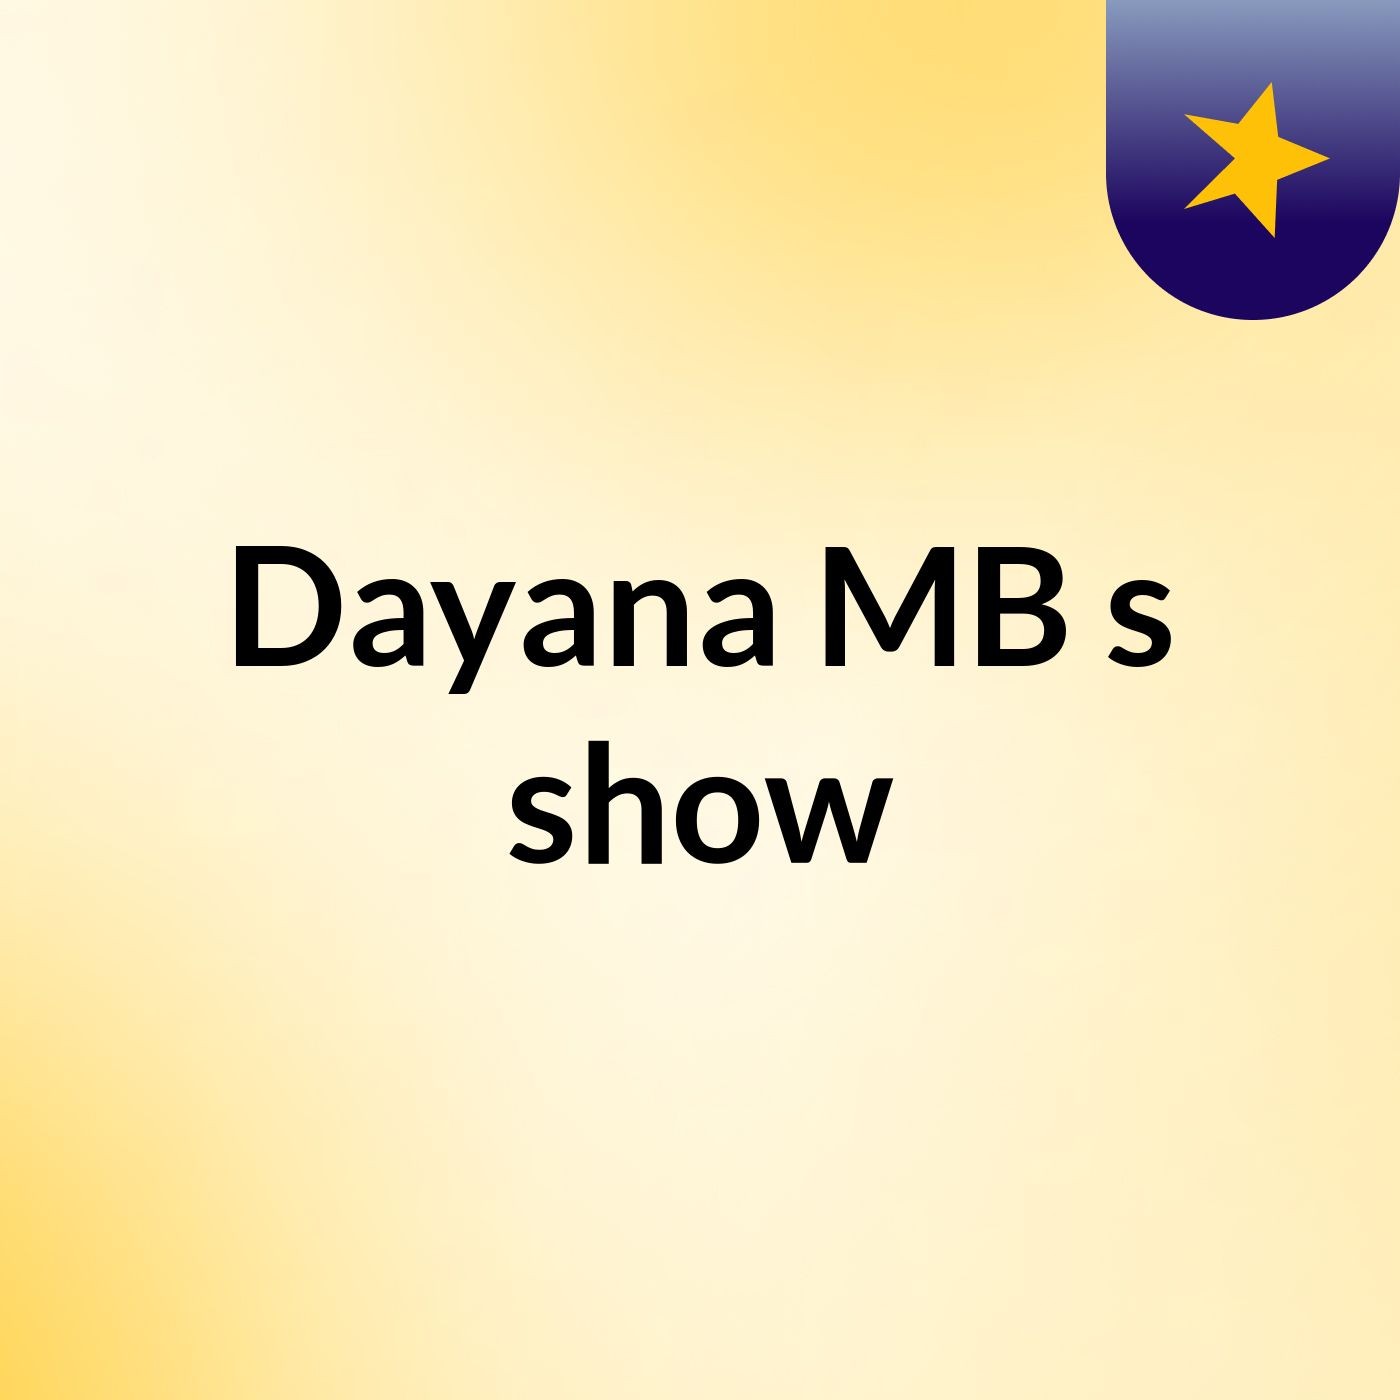 Dayana MB's show